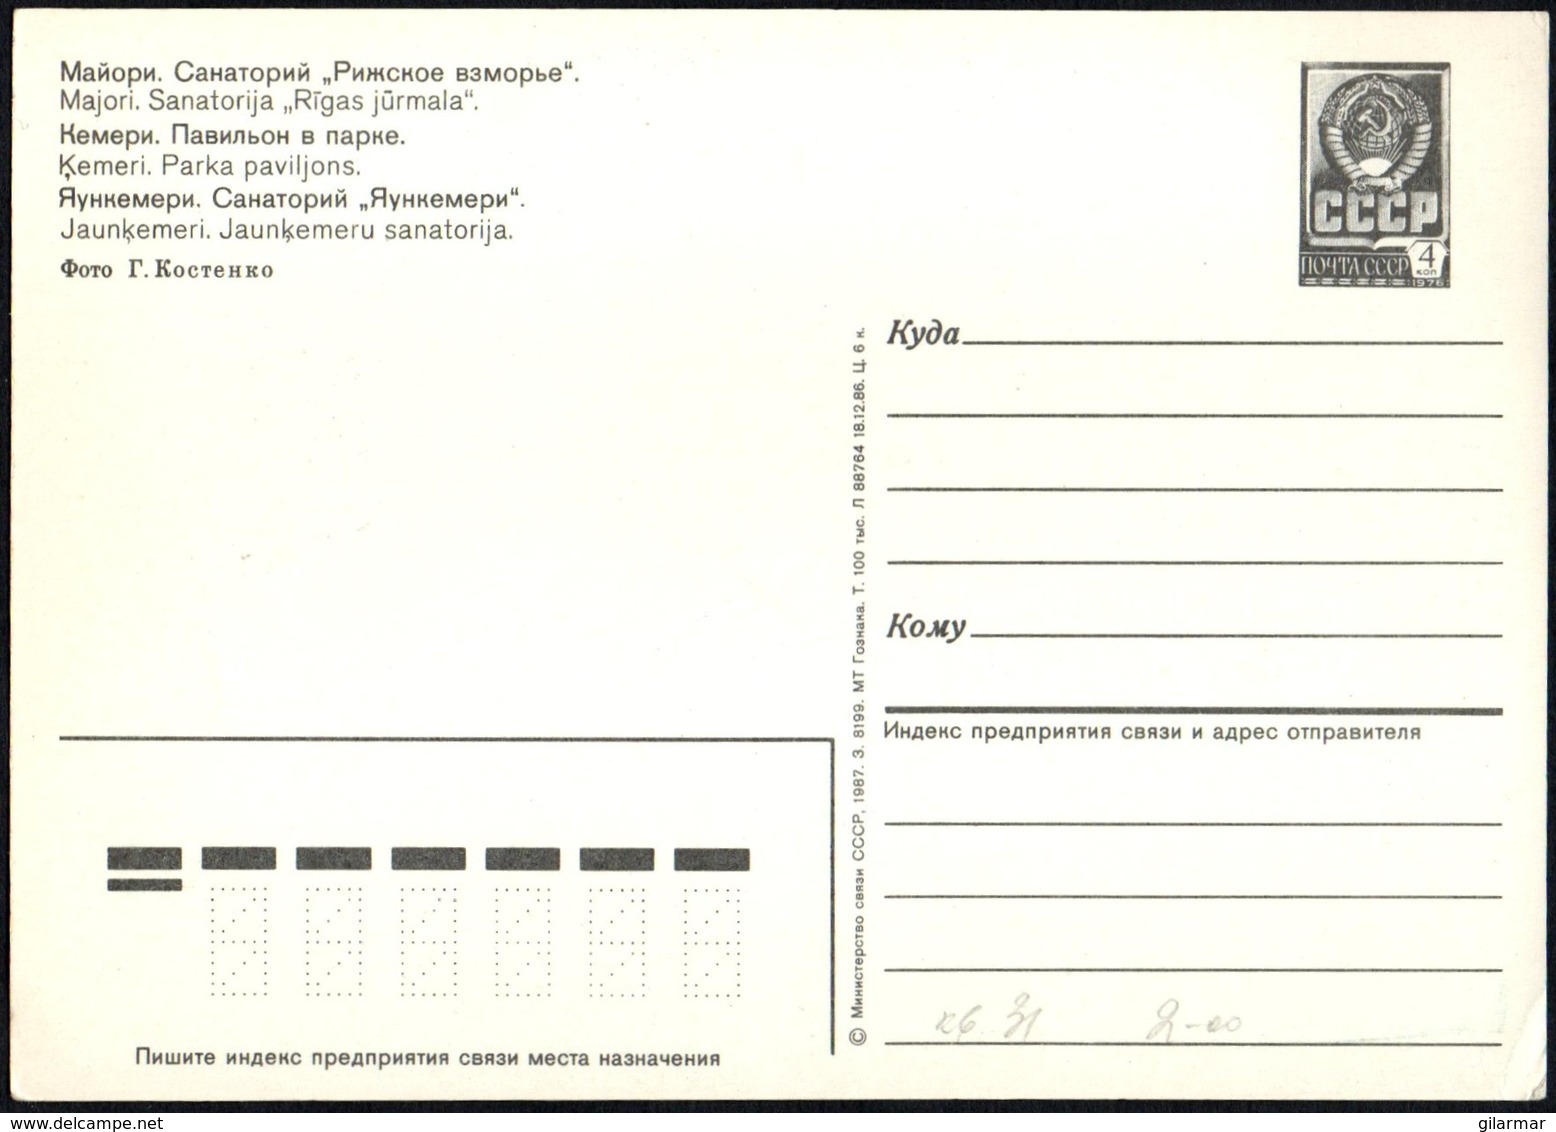 SOVIET UNION 1987 - LATVIAN SSR - MAJORI SANATORIUM RIGAS JURMALA - JAUNKEMERI SANATORIUM - POSTAL STATIONERY - 1980-91